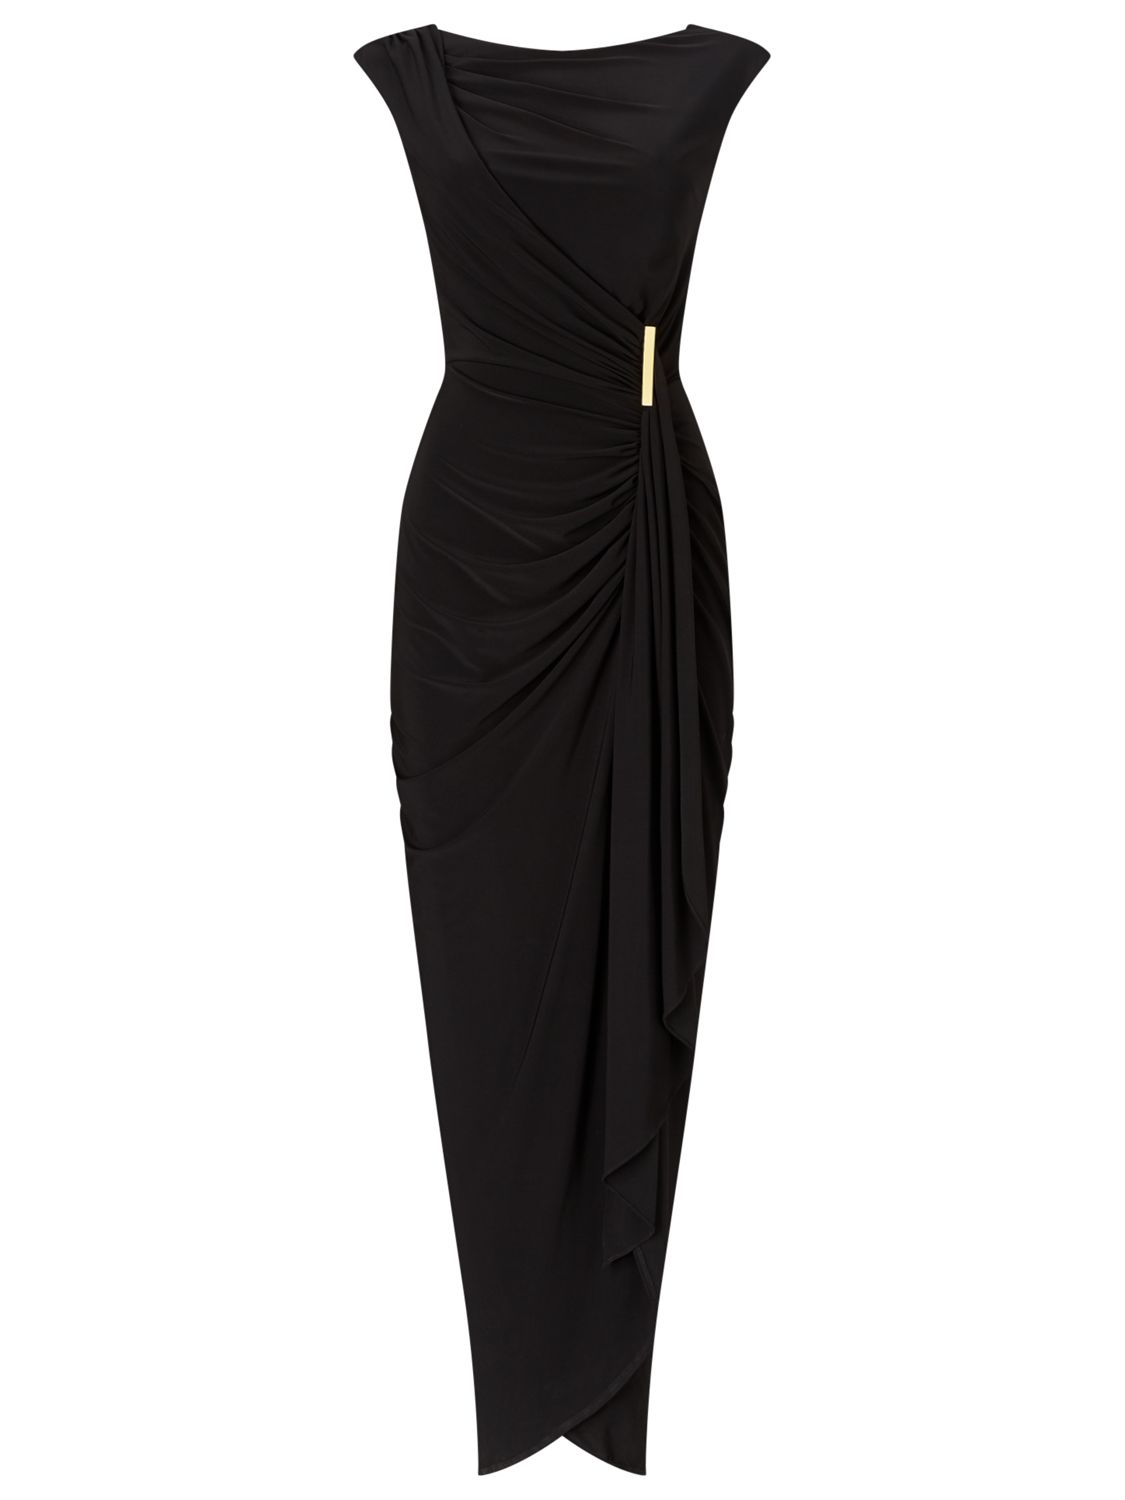 Phase Eight Donna Maxi Dress, Black at John Lewis & Partners